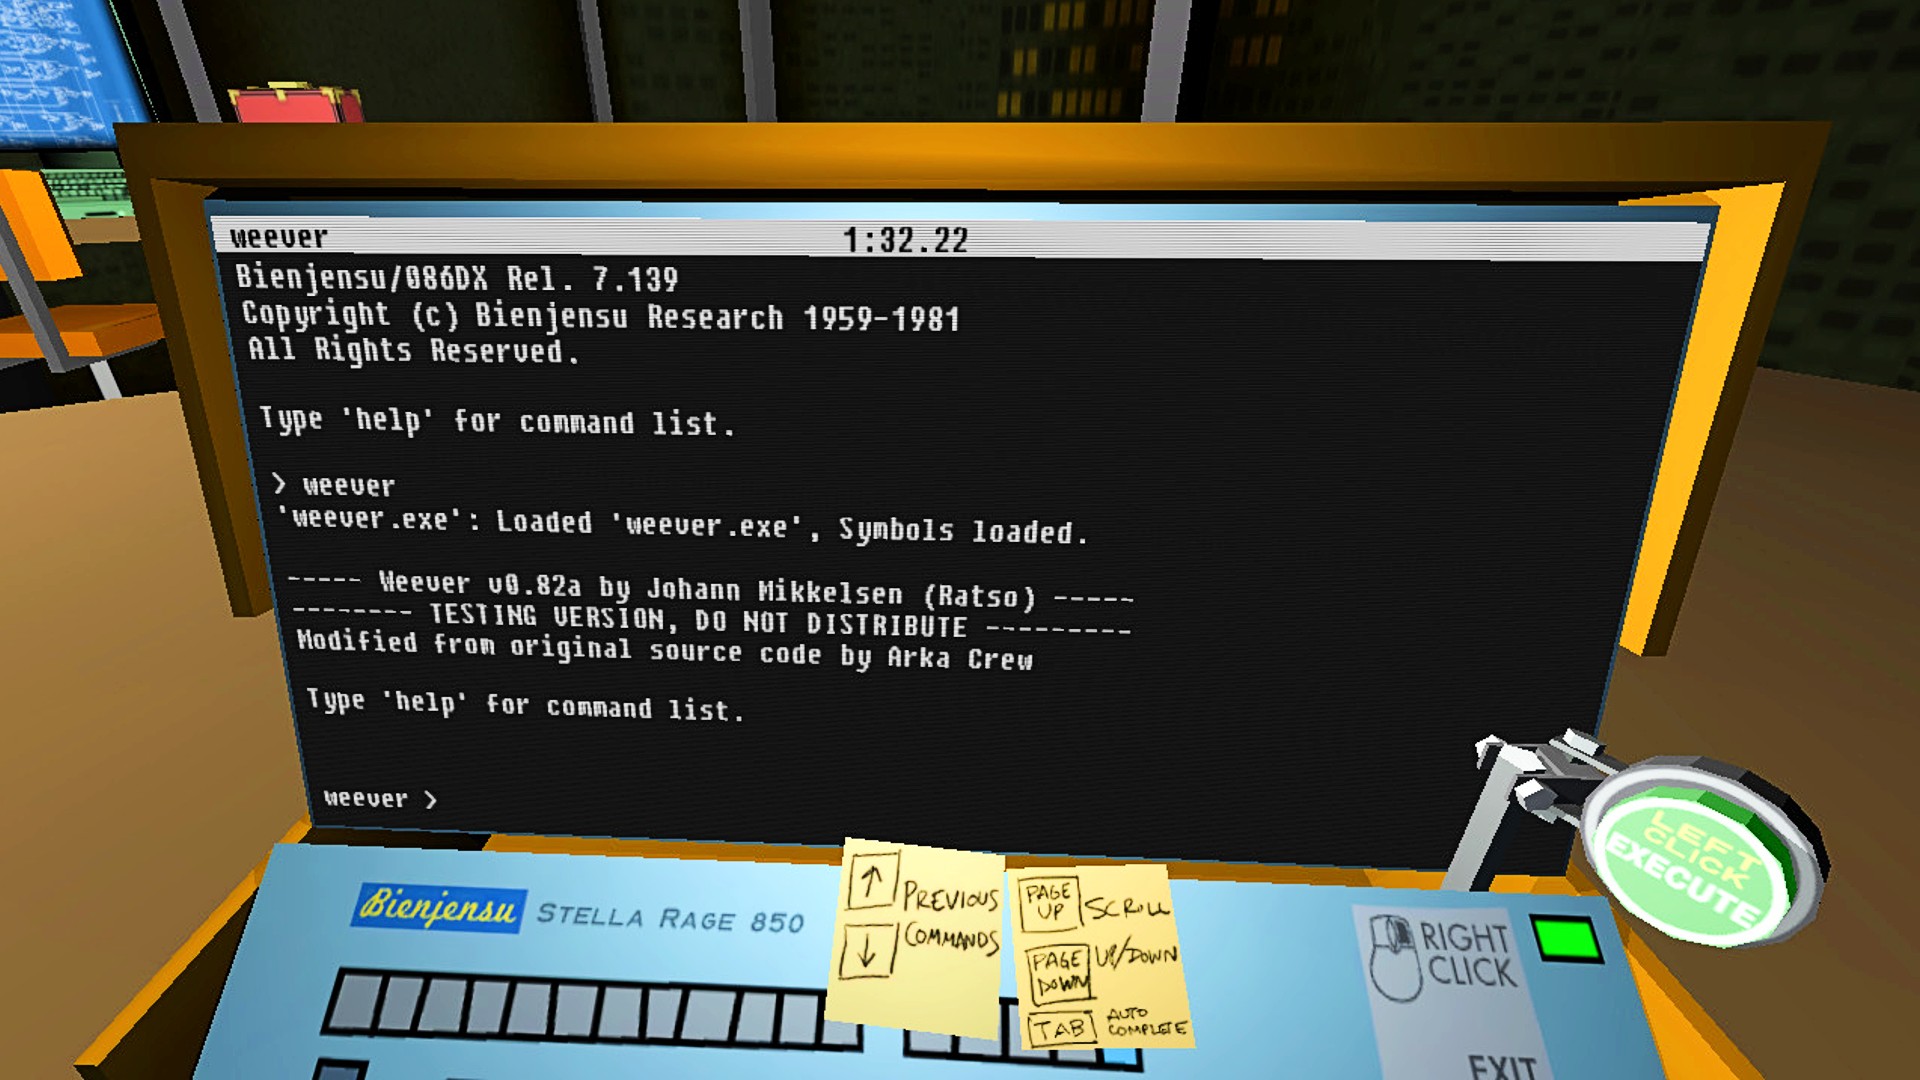 Hacking Simulator by MaciekGplay - Game Jolt